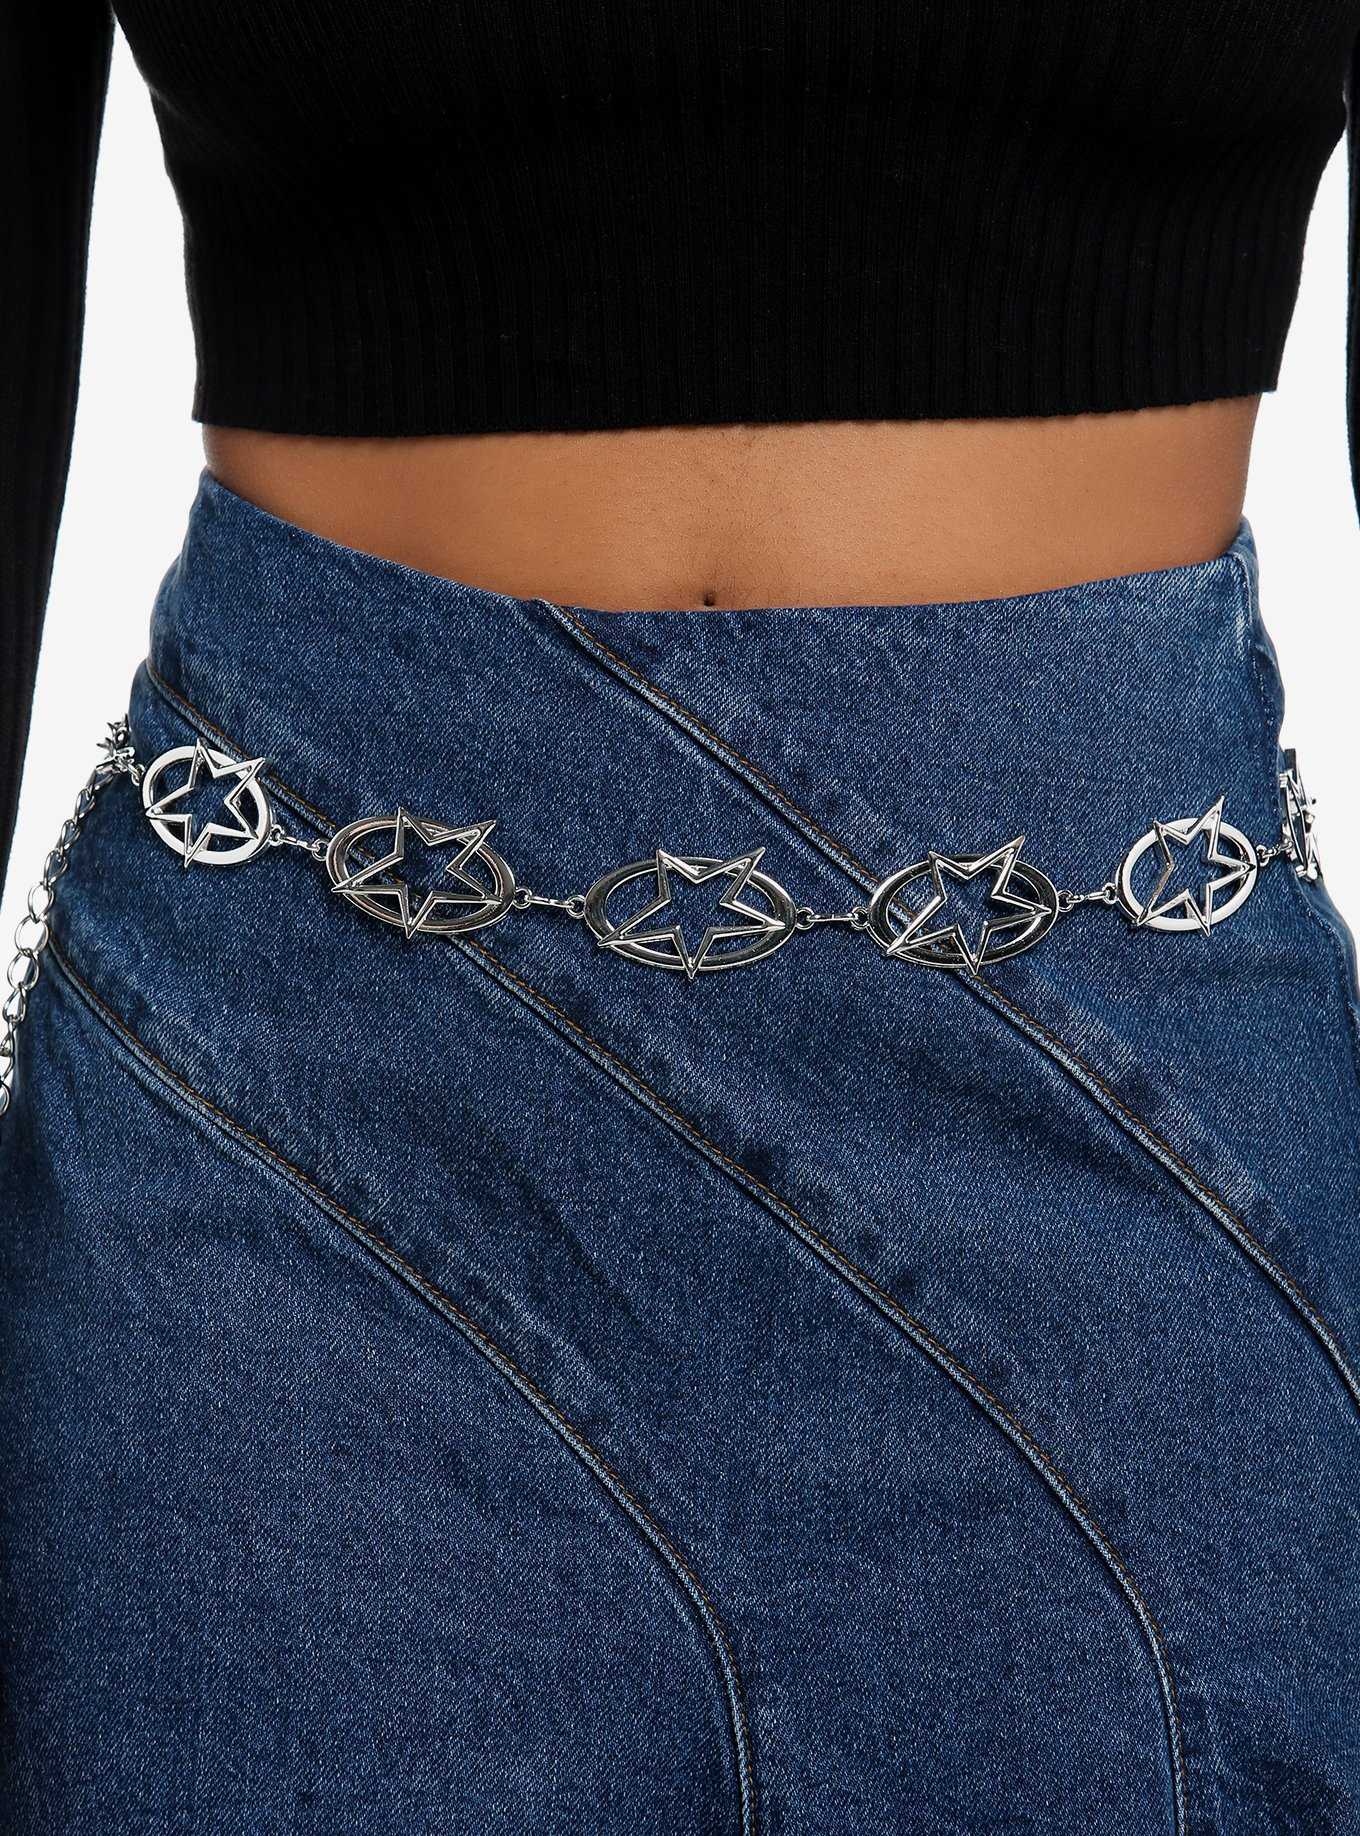 Silver Circle Star Charm Chain Belt, , hi-res